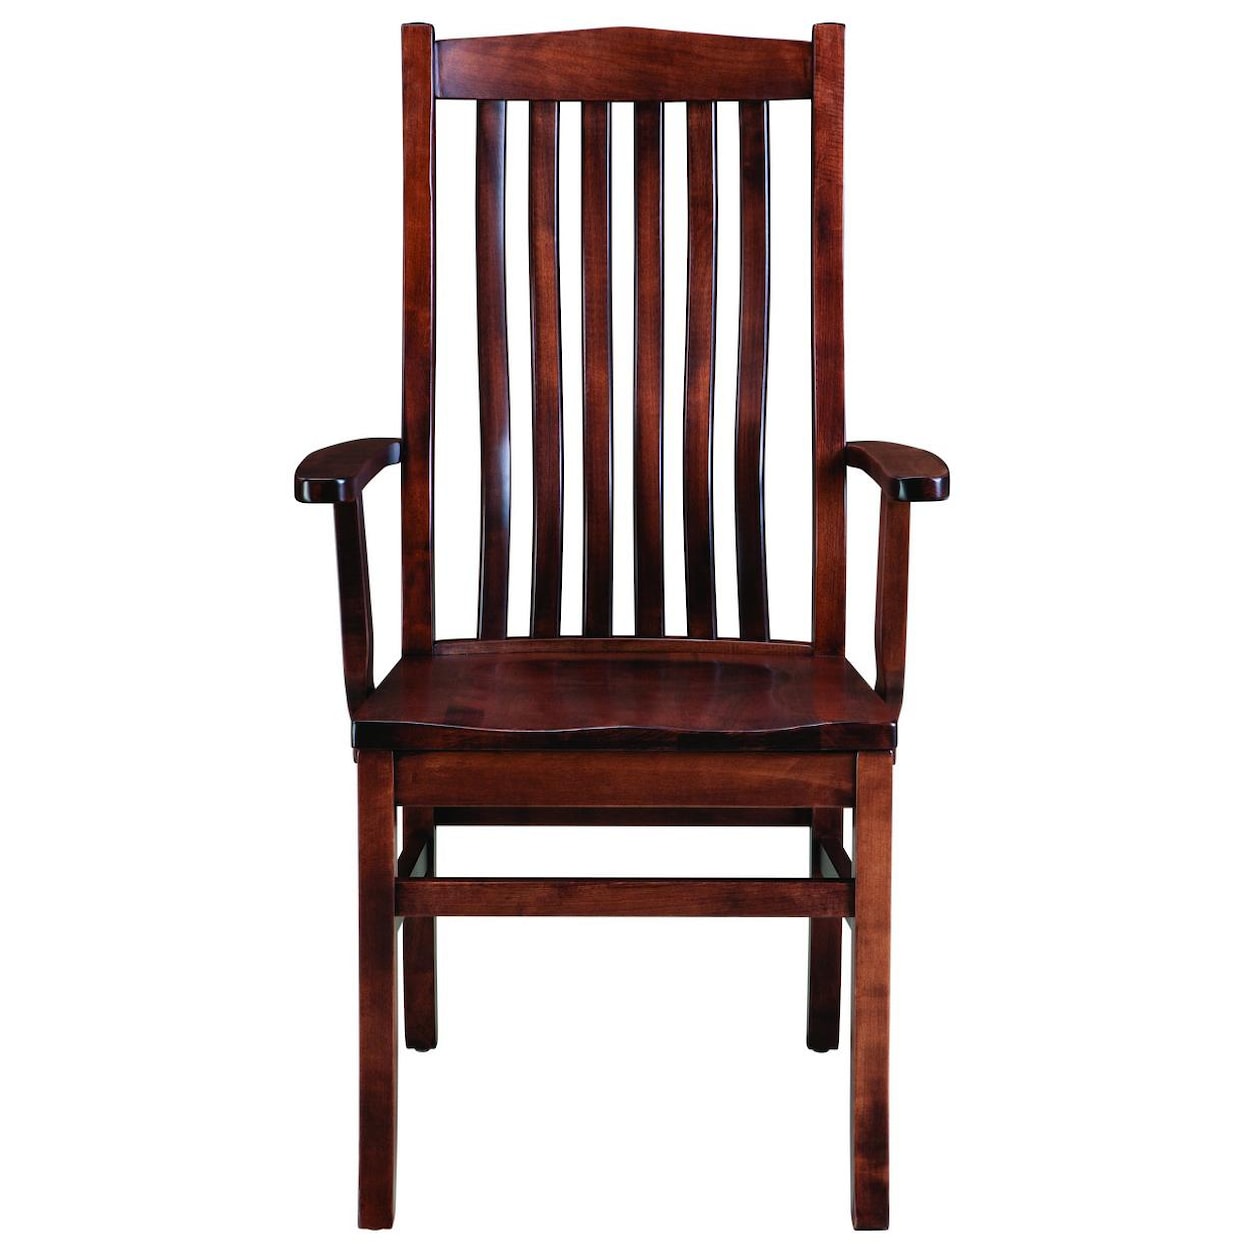 Mavin Prestige Arm Chair